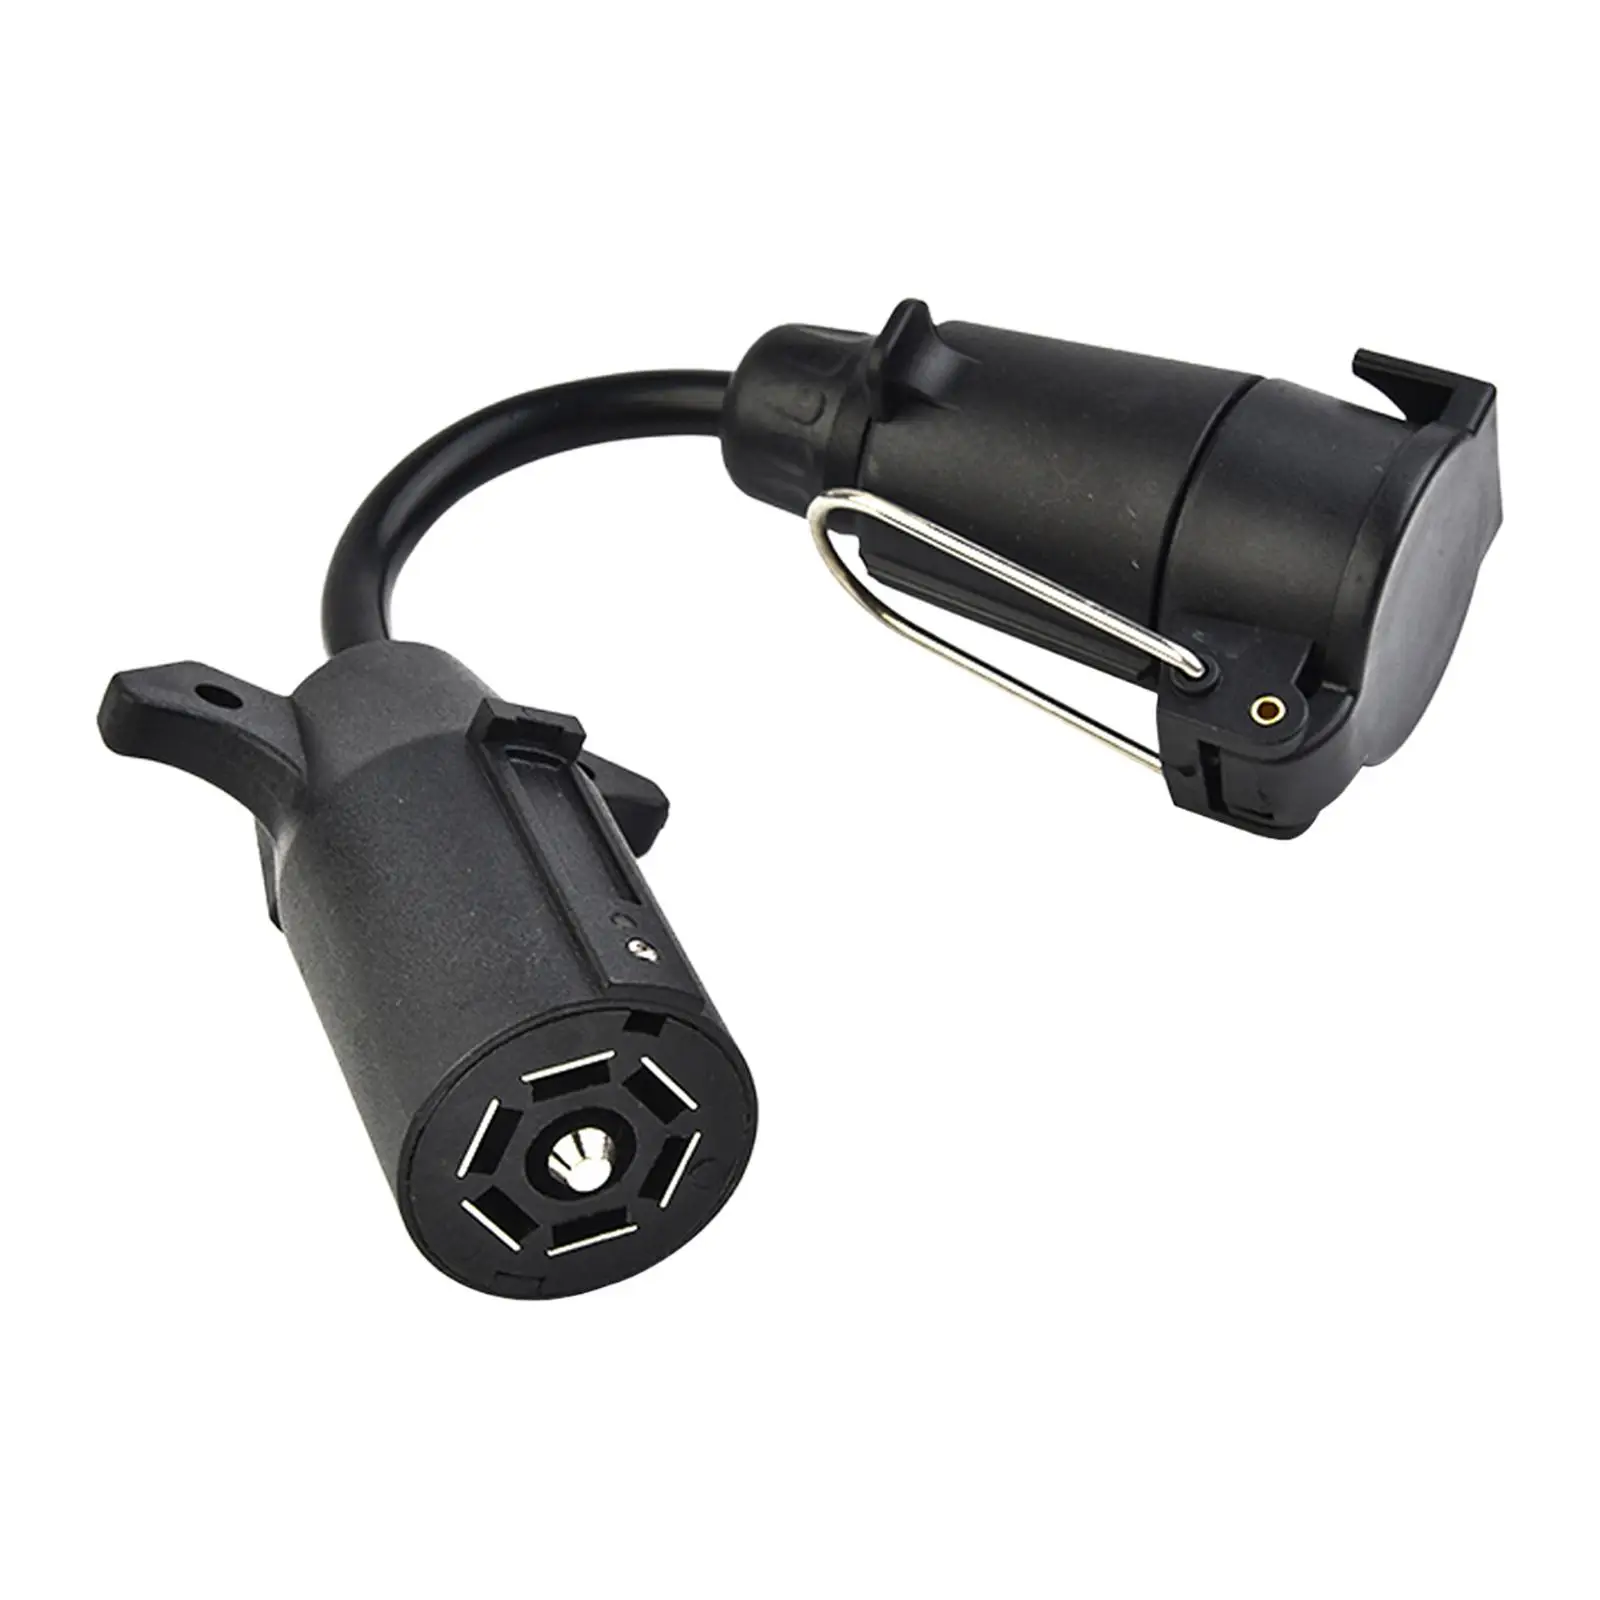 7 Way Blade Socket (US Vehicle) to 7 Pin Round (european Trailer) Trailer Adapter Wiring Connector Trailer Socket Plug Harness